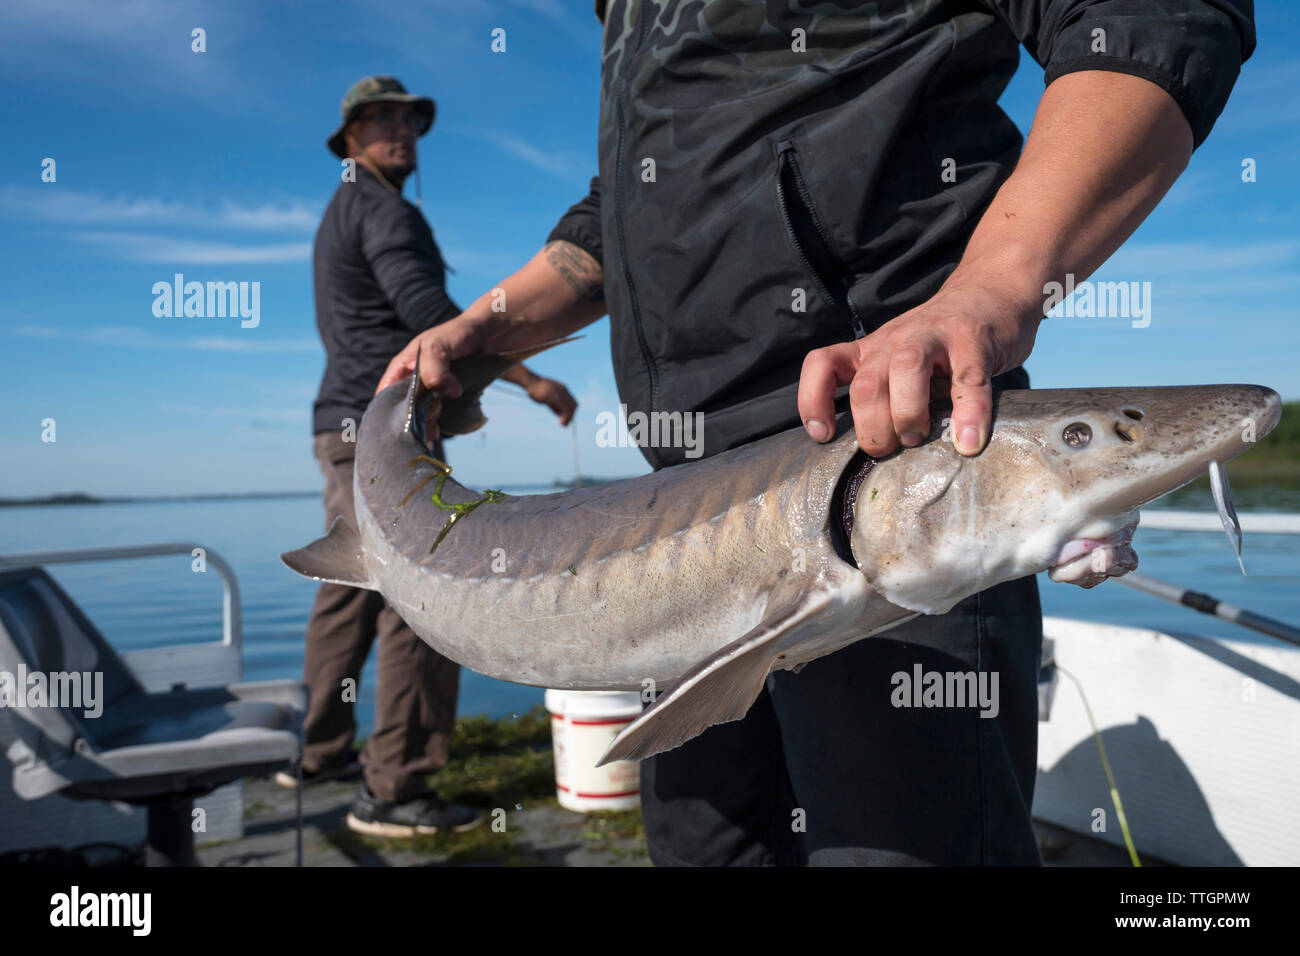 https://c8.alamy.com/comp/TTGPMW/mohawk-men-catch-sturgeon-in-akwesasne-waters-with-bait-and-line-TTGPMW.jpg